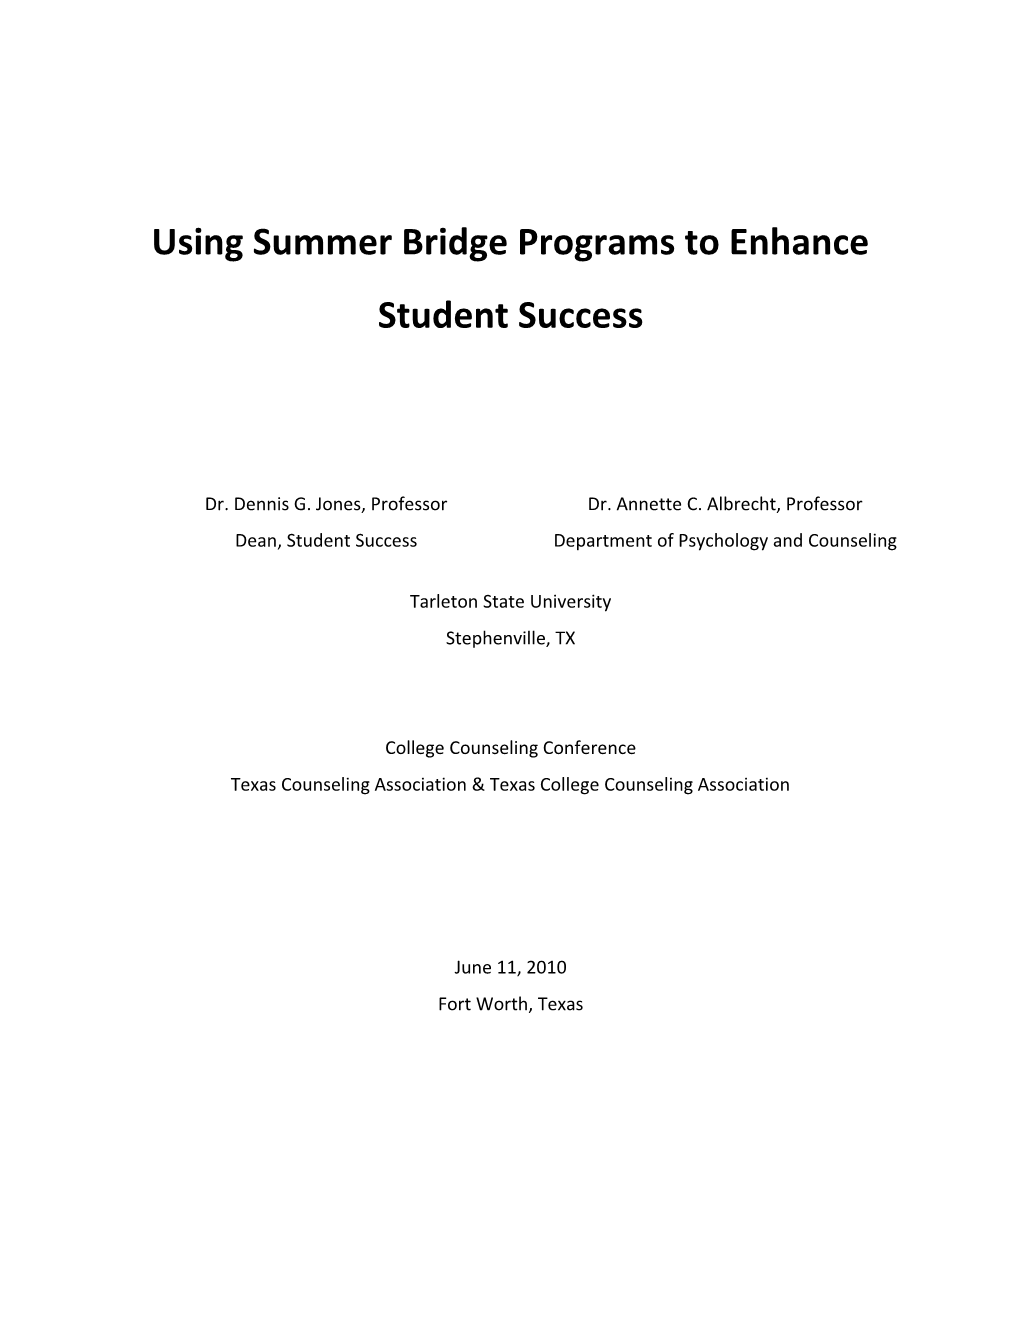 Using Summer Bridge Programs to Enhance Student Success